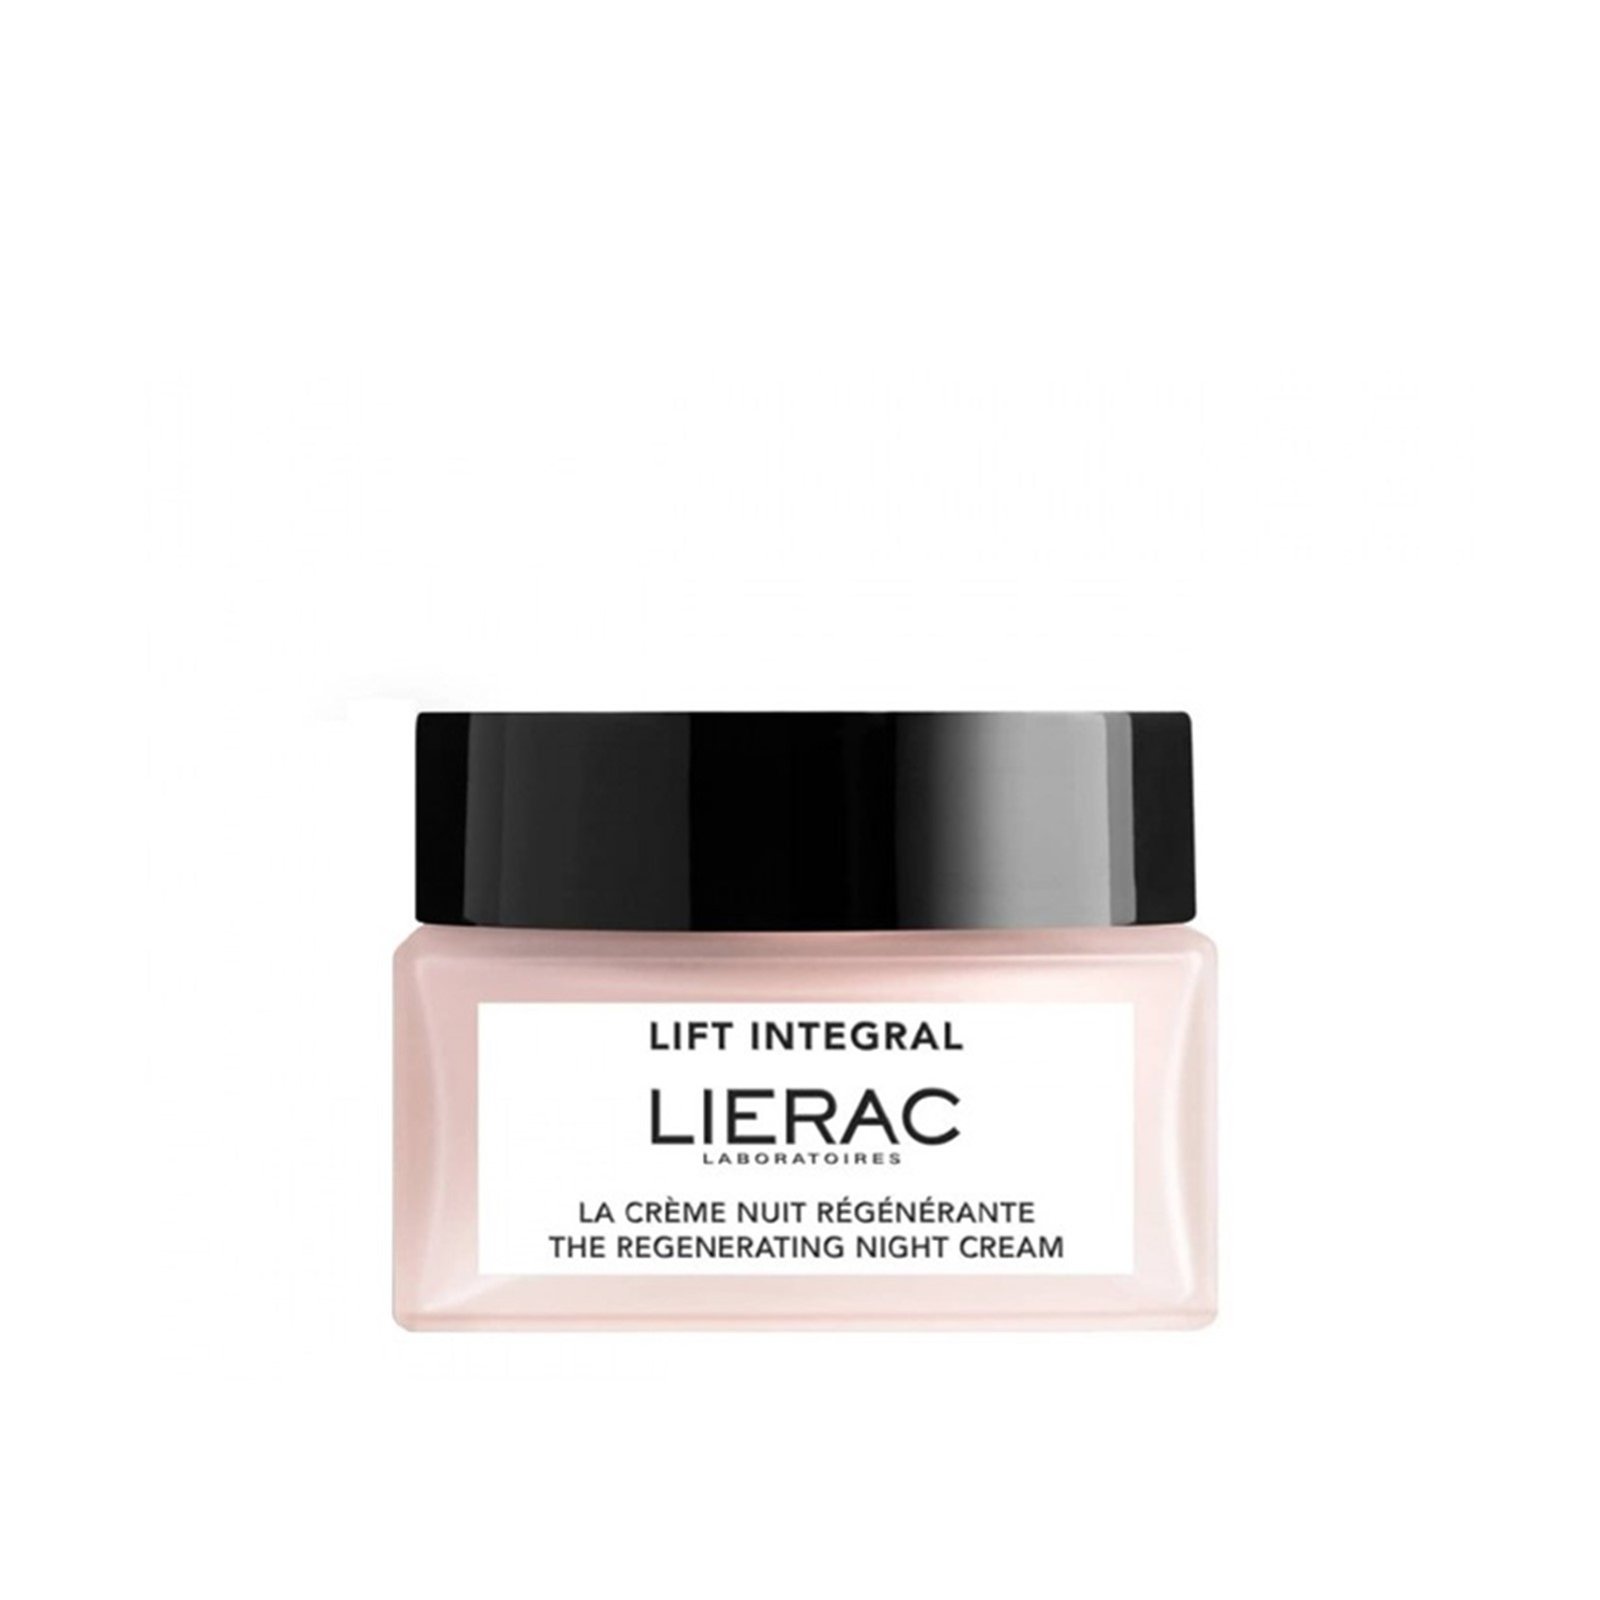 Lierac Lift Integral The Regenerating Night Cream 50ml (1.69fl oz)